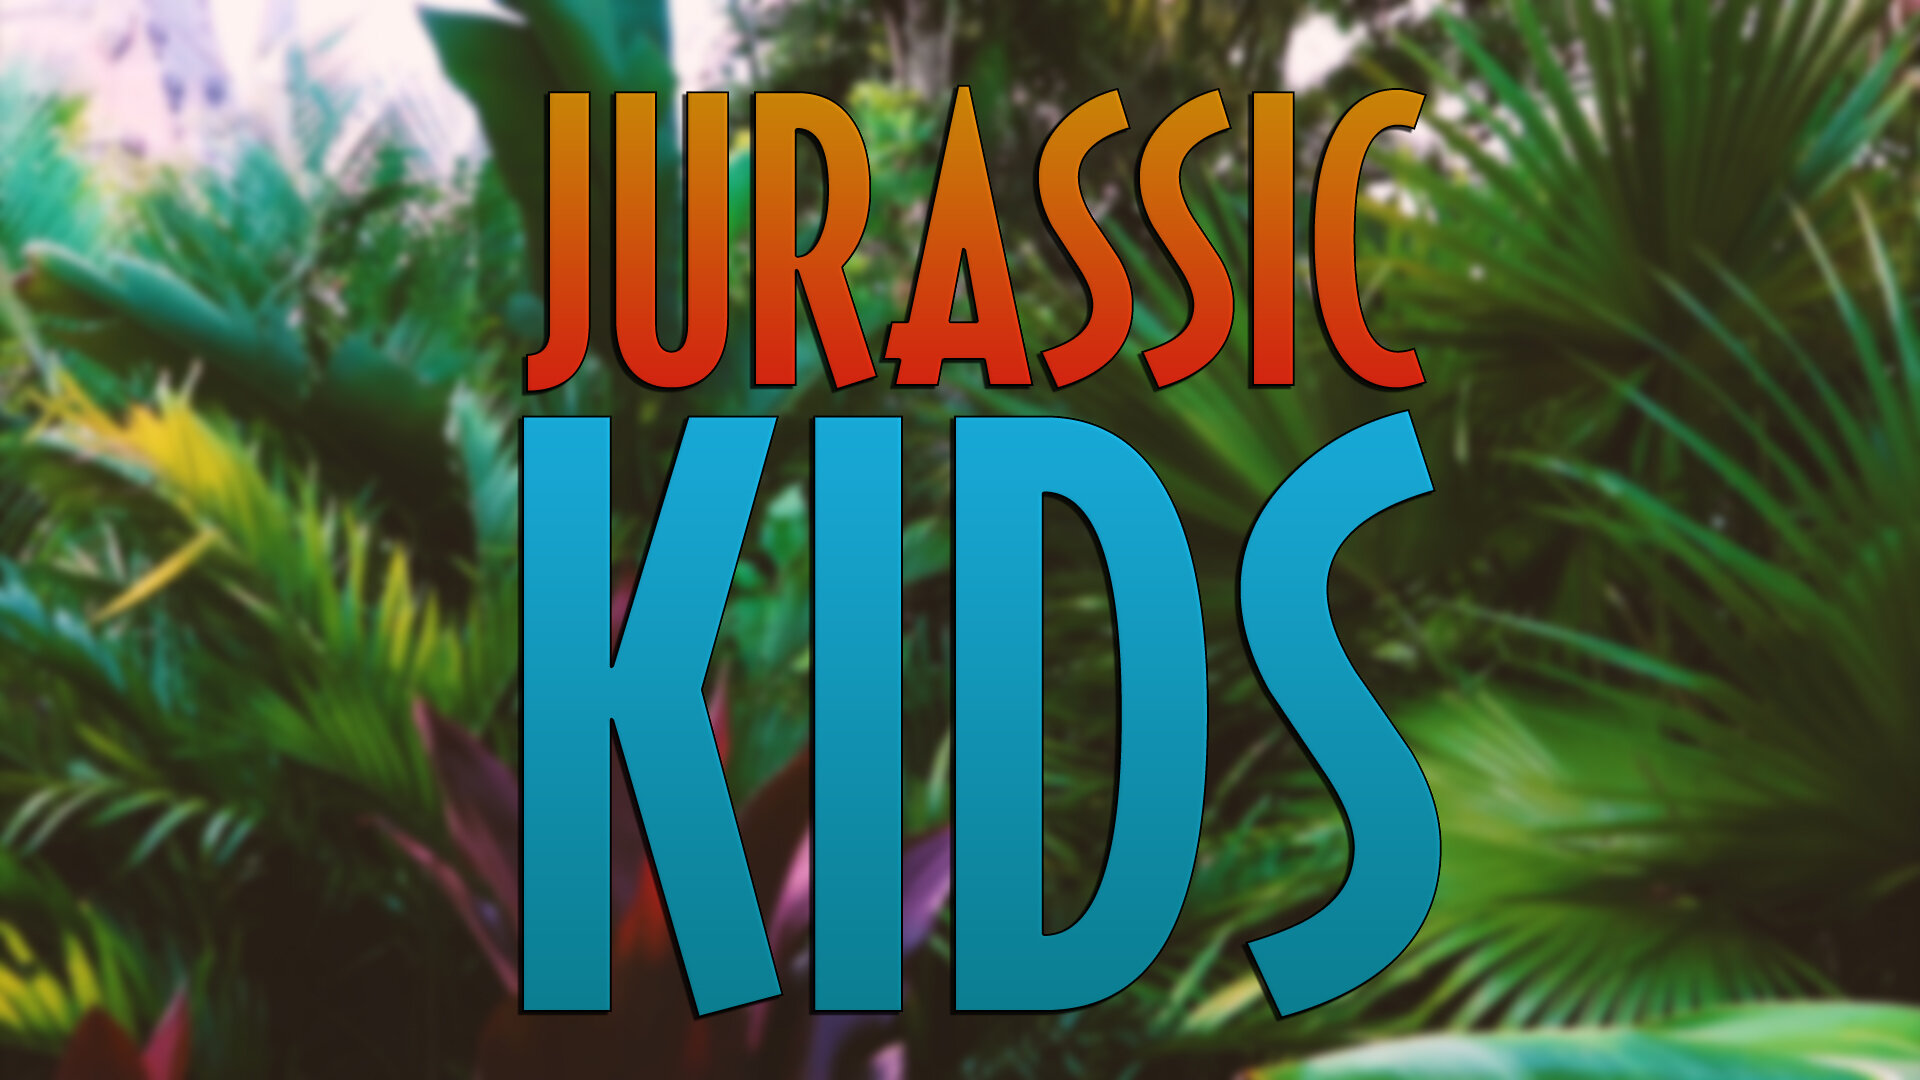 Jurassic-Kids.jpg